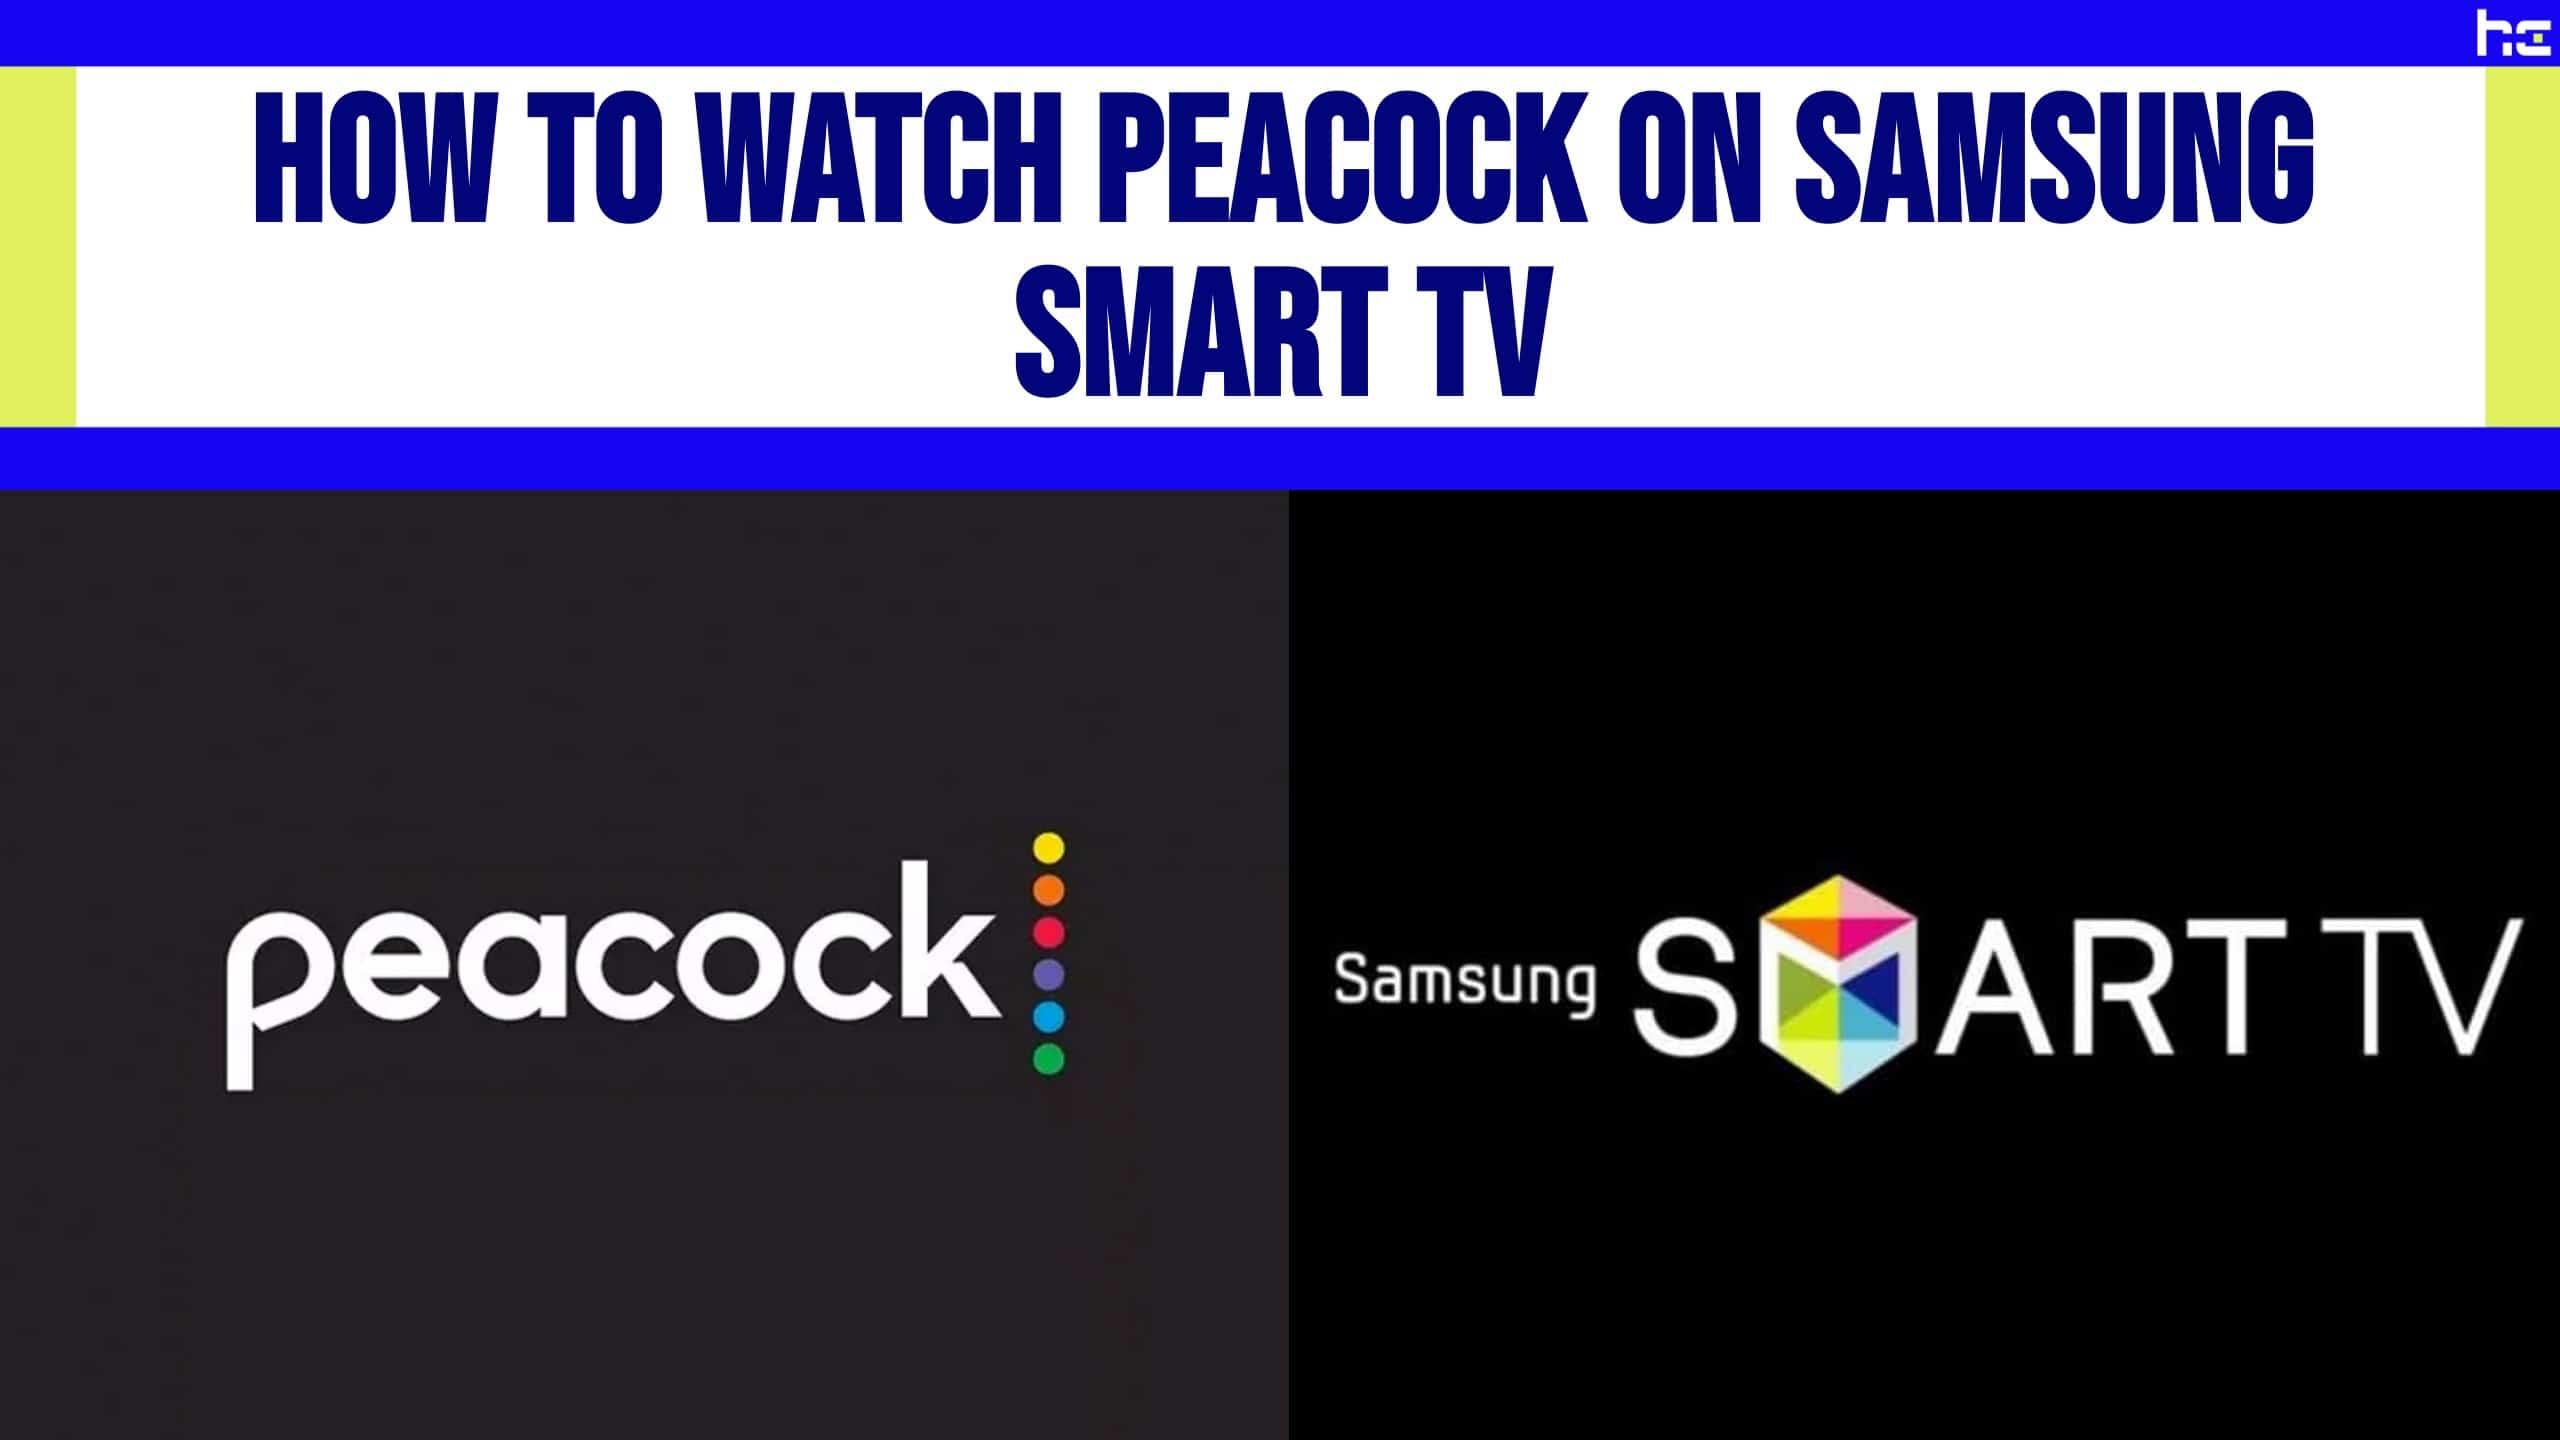 Peacock logo next to Samsung Smart TV logo.